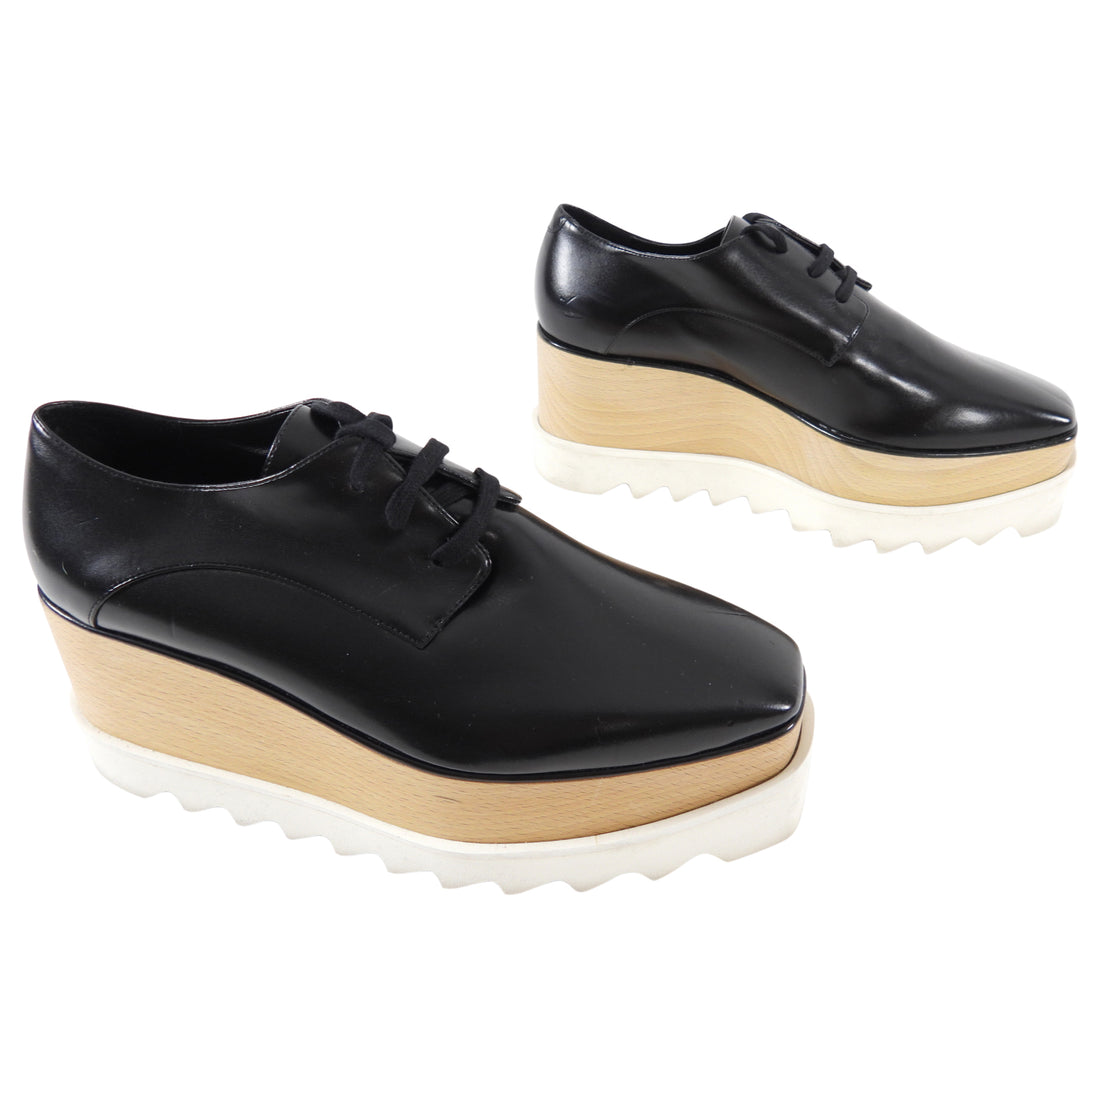 Stella McCartney Black Platform Oxford Shoes - USA 6